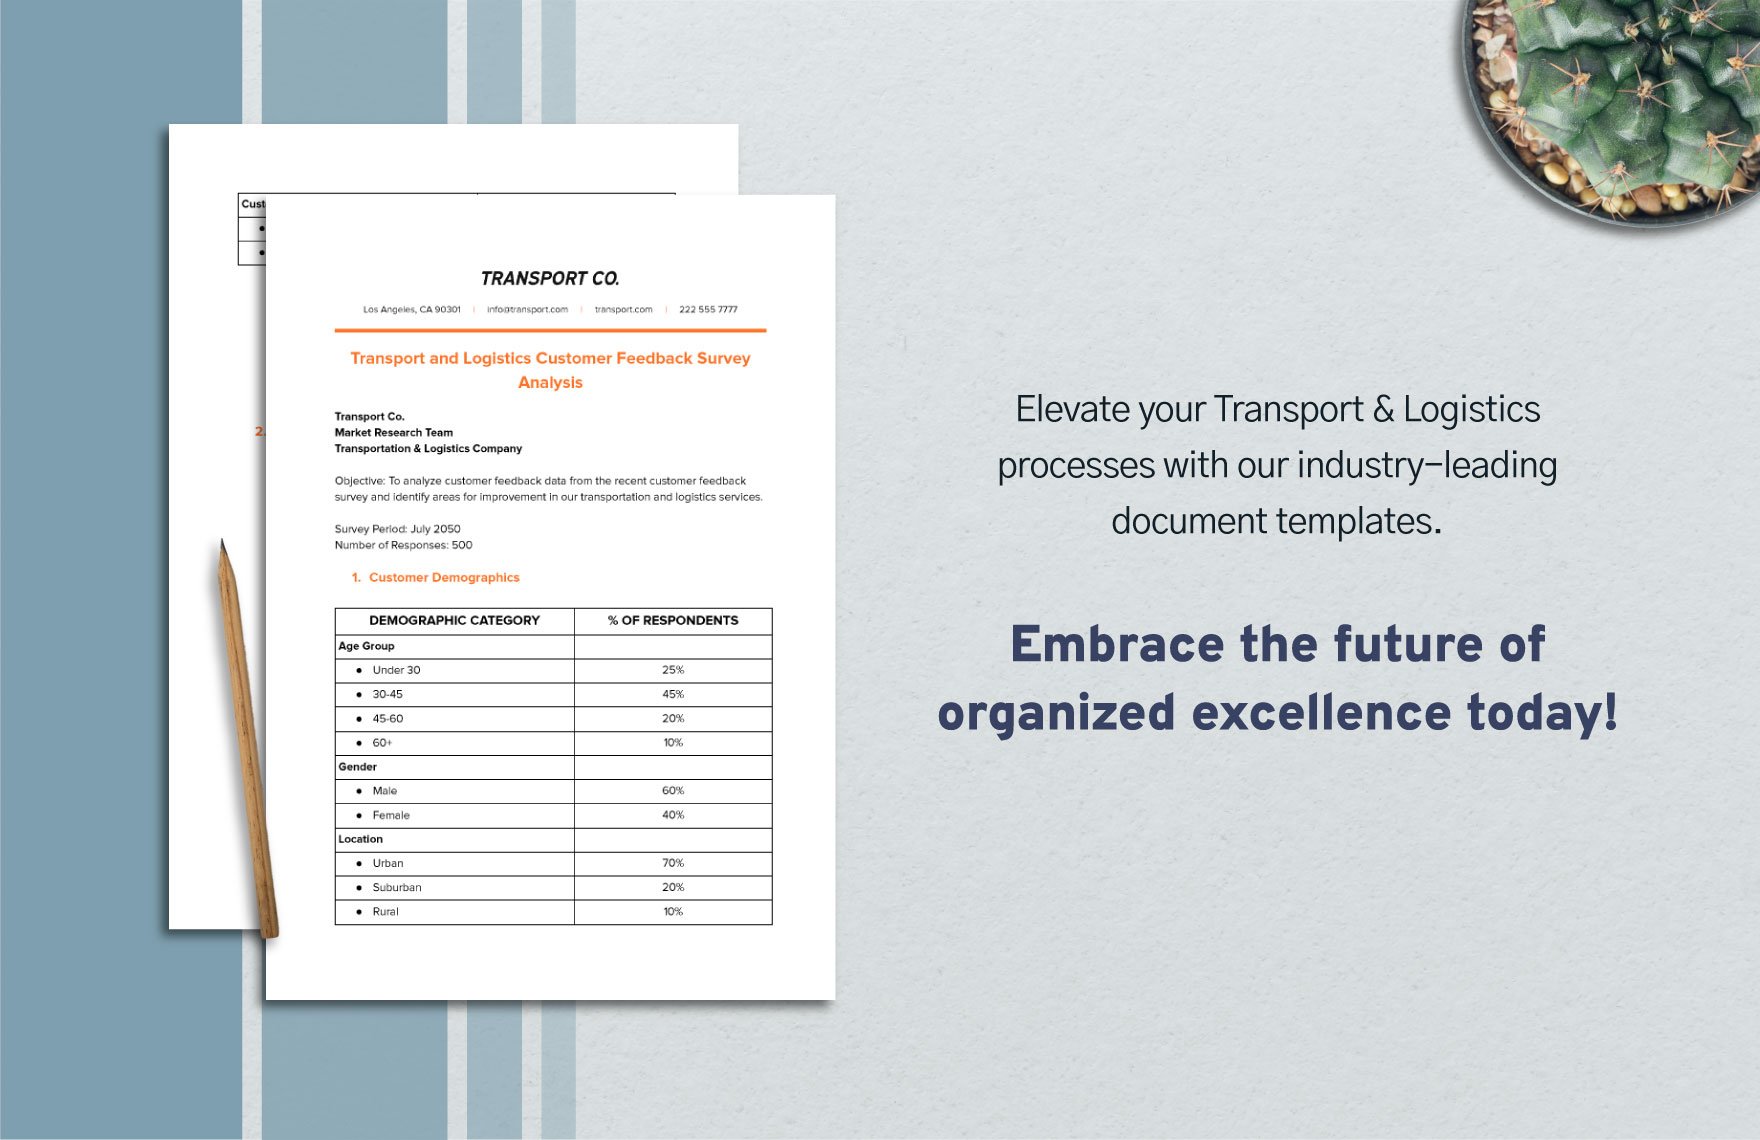 Transport and Logistics Customer Feedback Survey Analysis Template